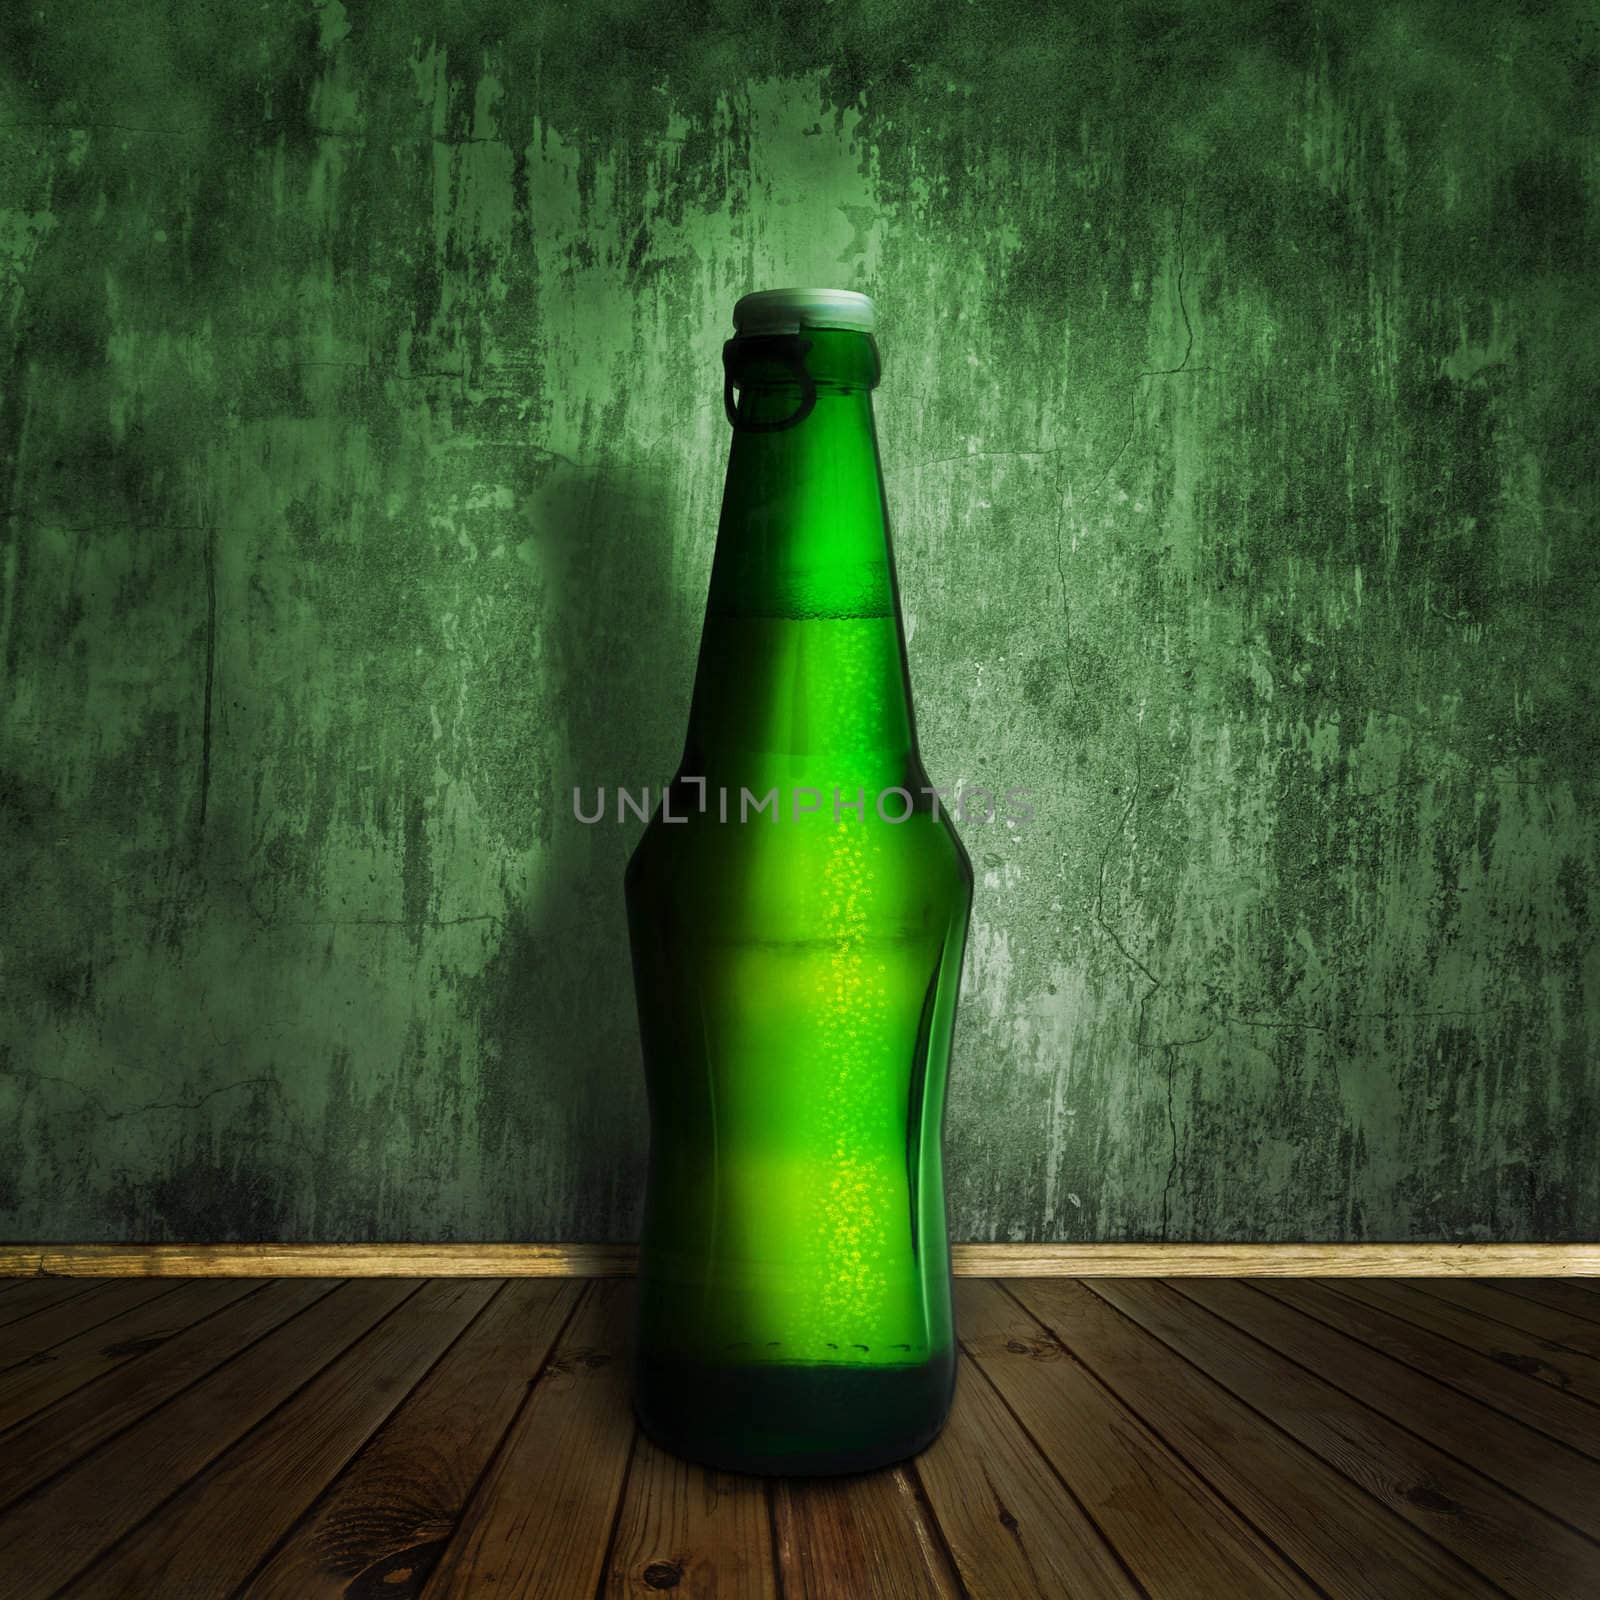 cool beer bottle at wooden floor over grunge wall 